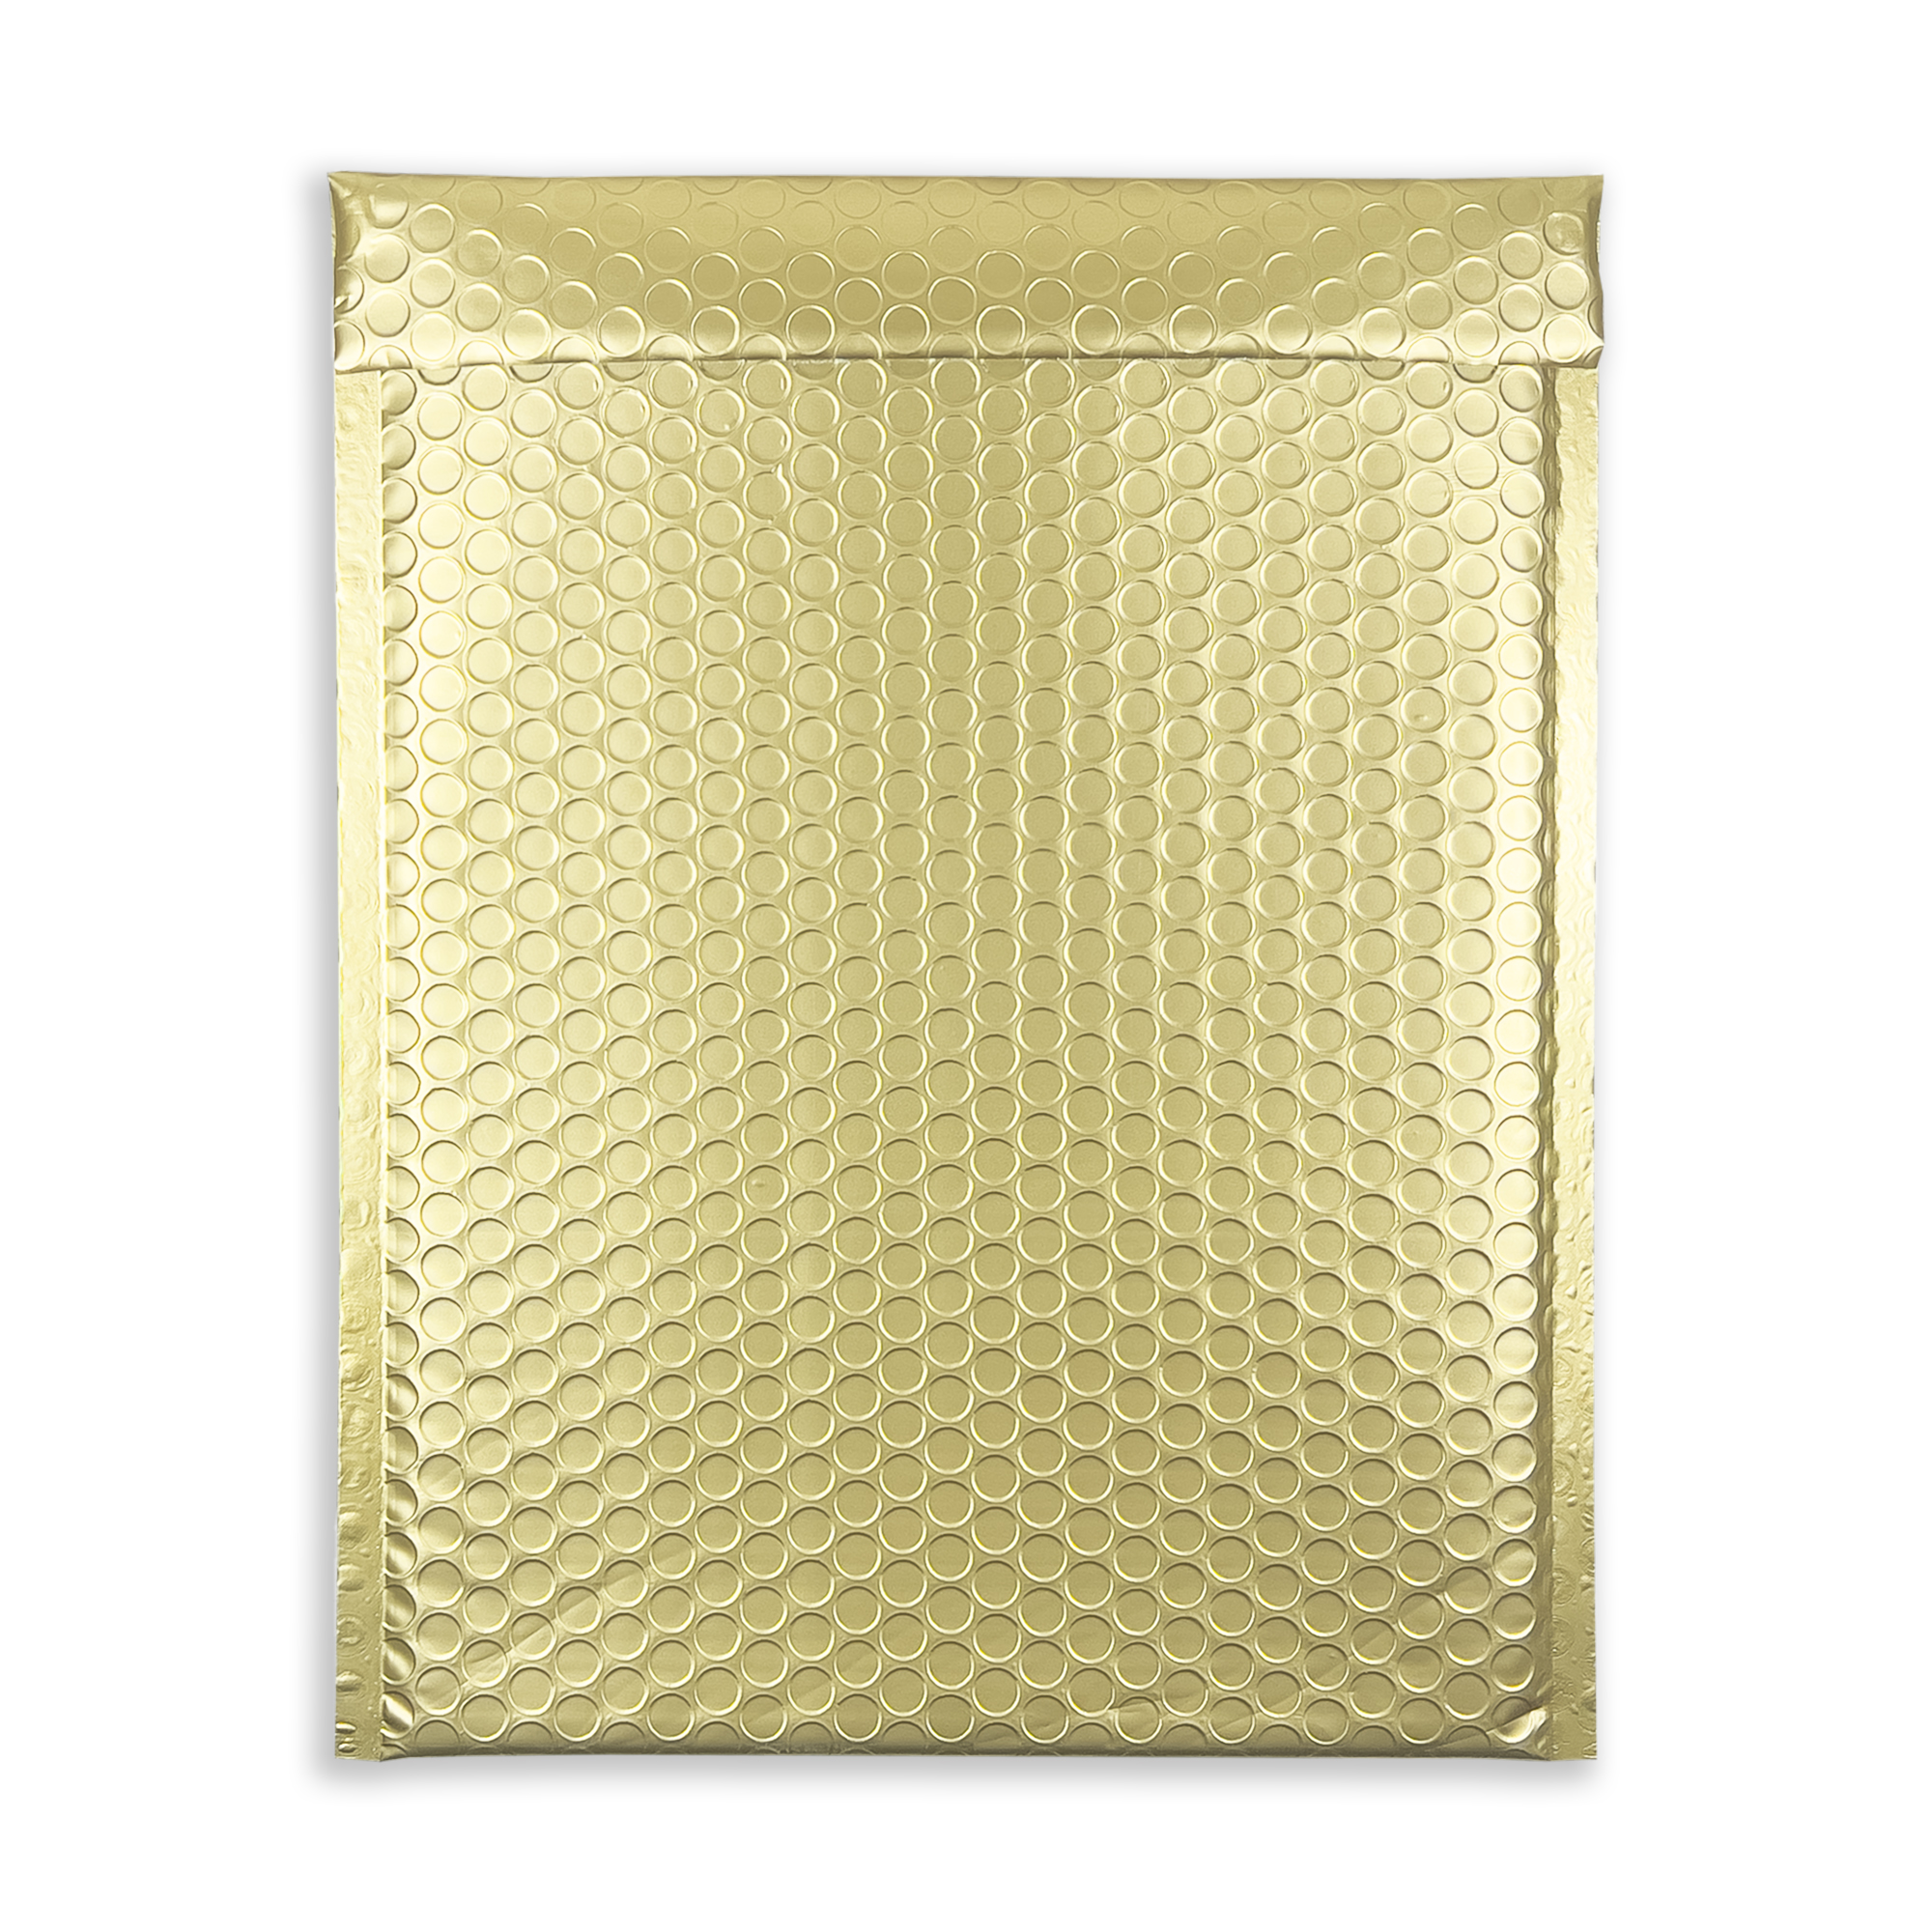 metallic-gold-bubble-padded-envelopes-matt-rectangle-flap-closed